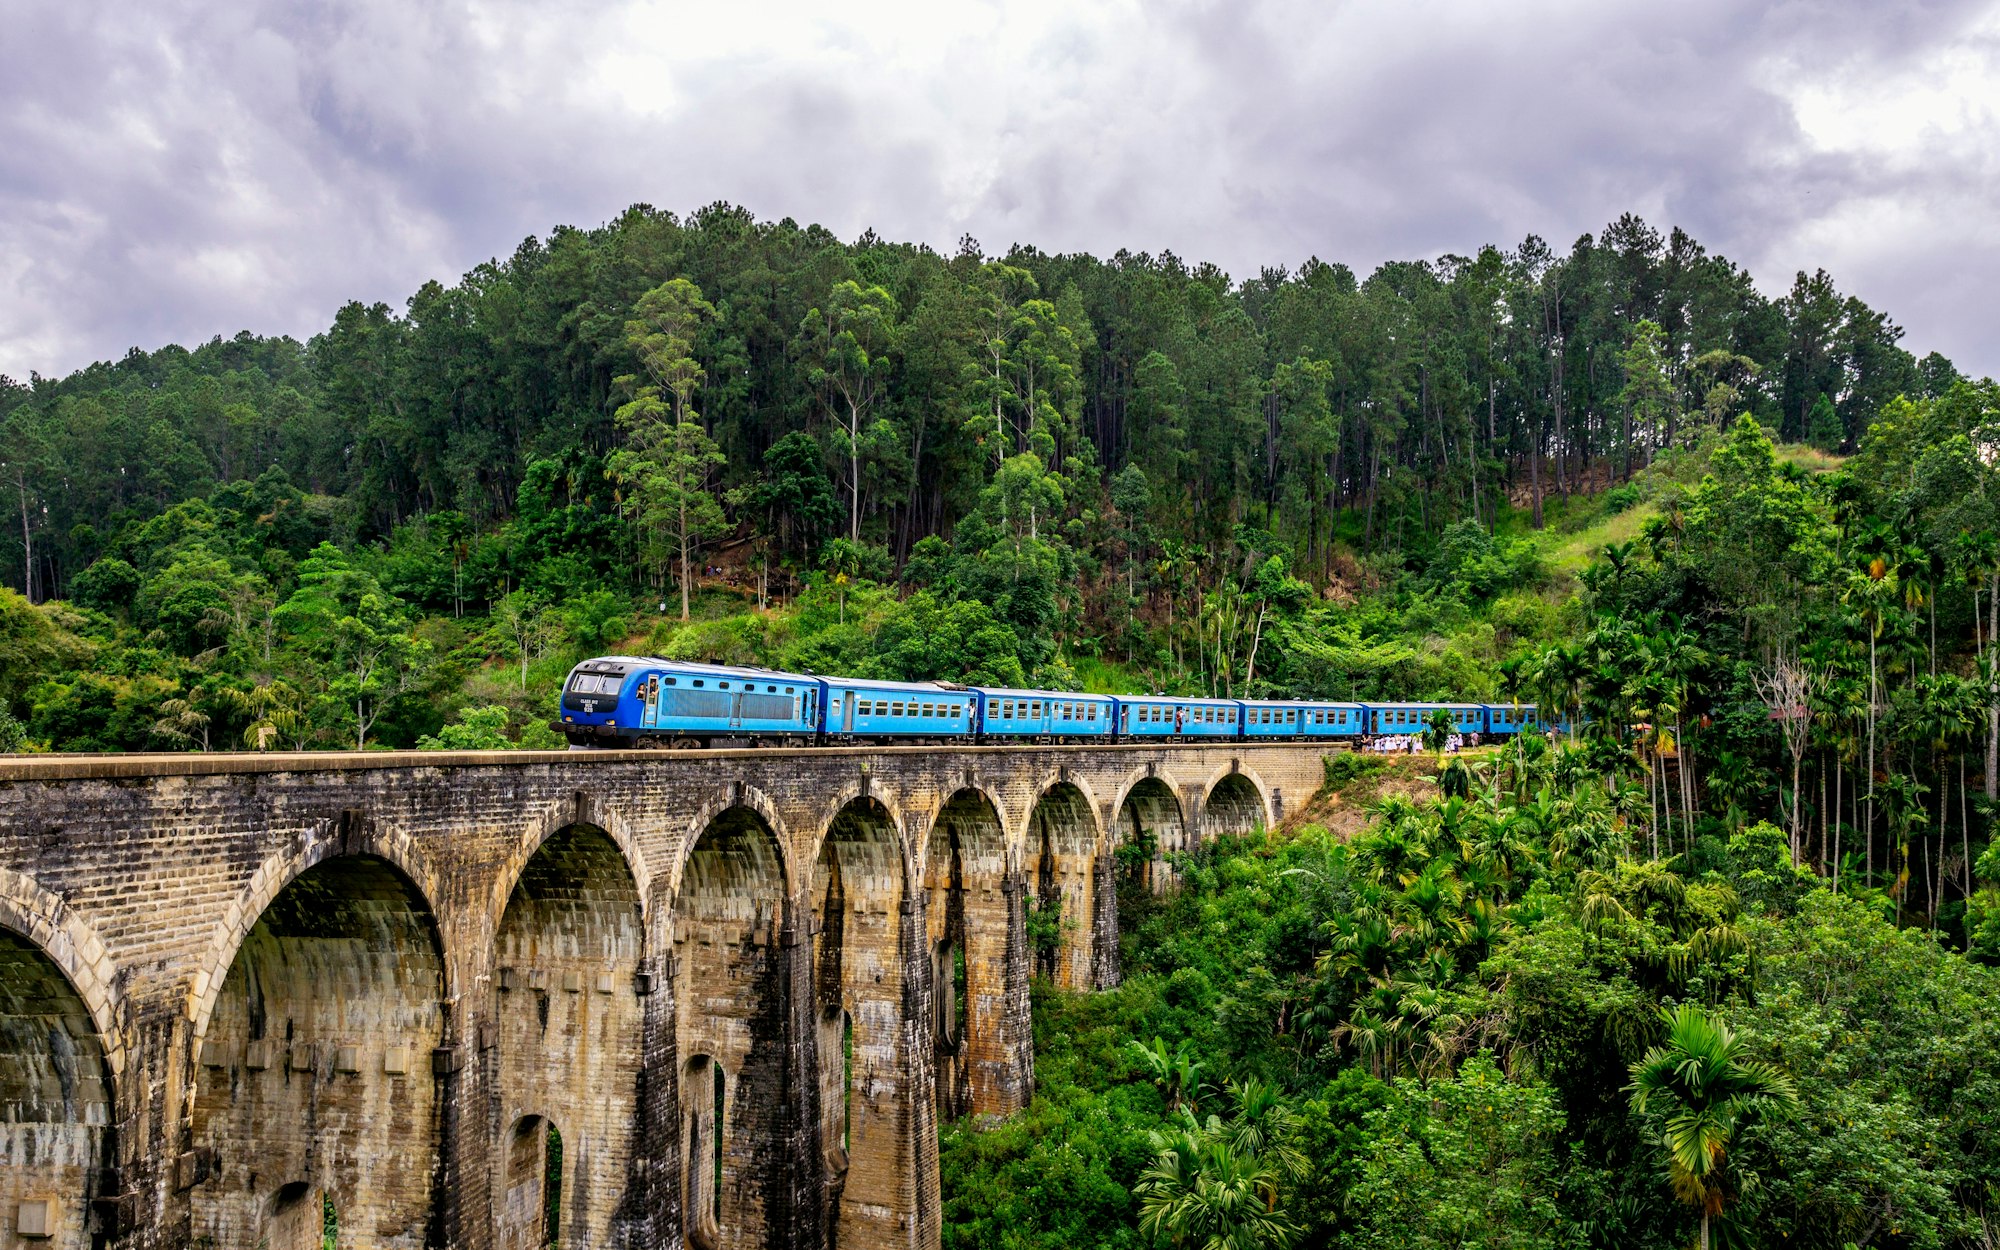 Colombo to Badulla Train Ride: The unforgettable train journey in Ceylon